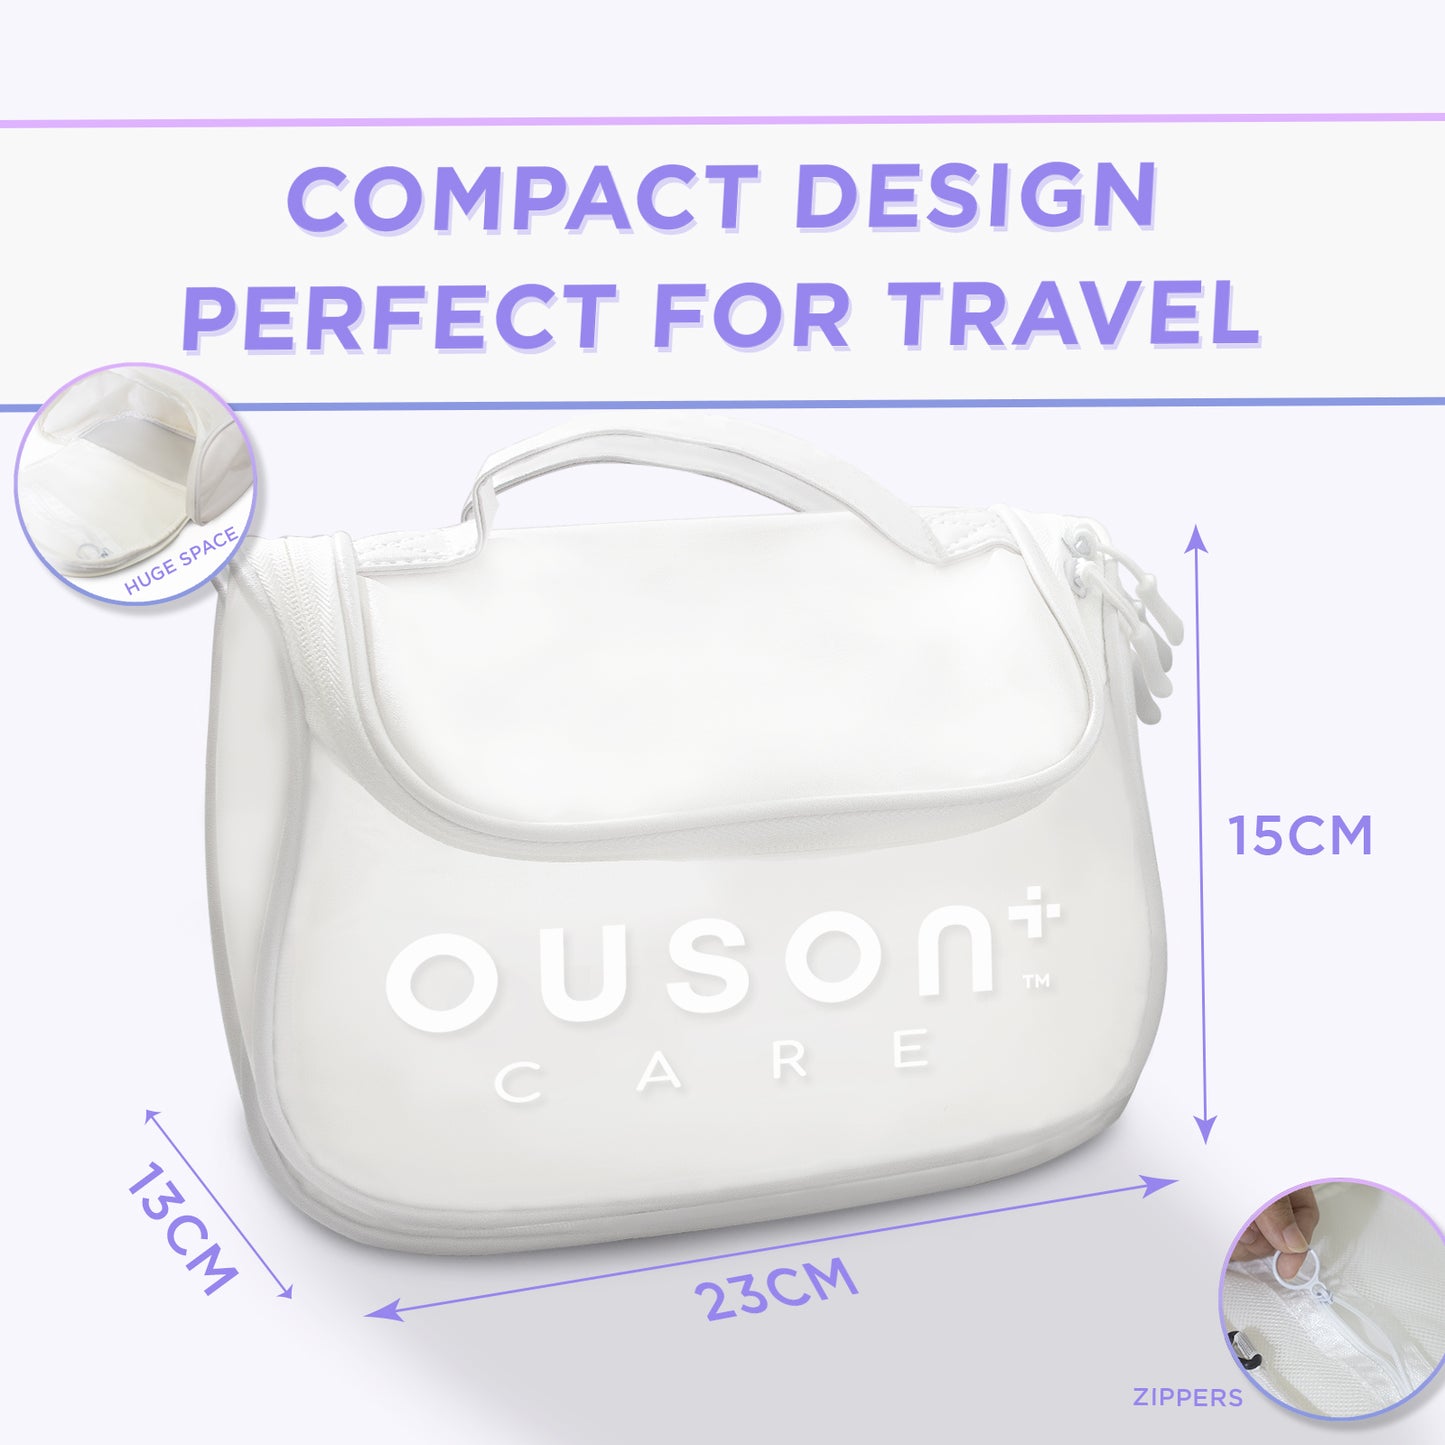 Ouson Care Premium Travel Bag